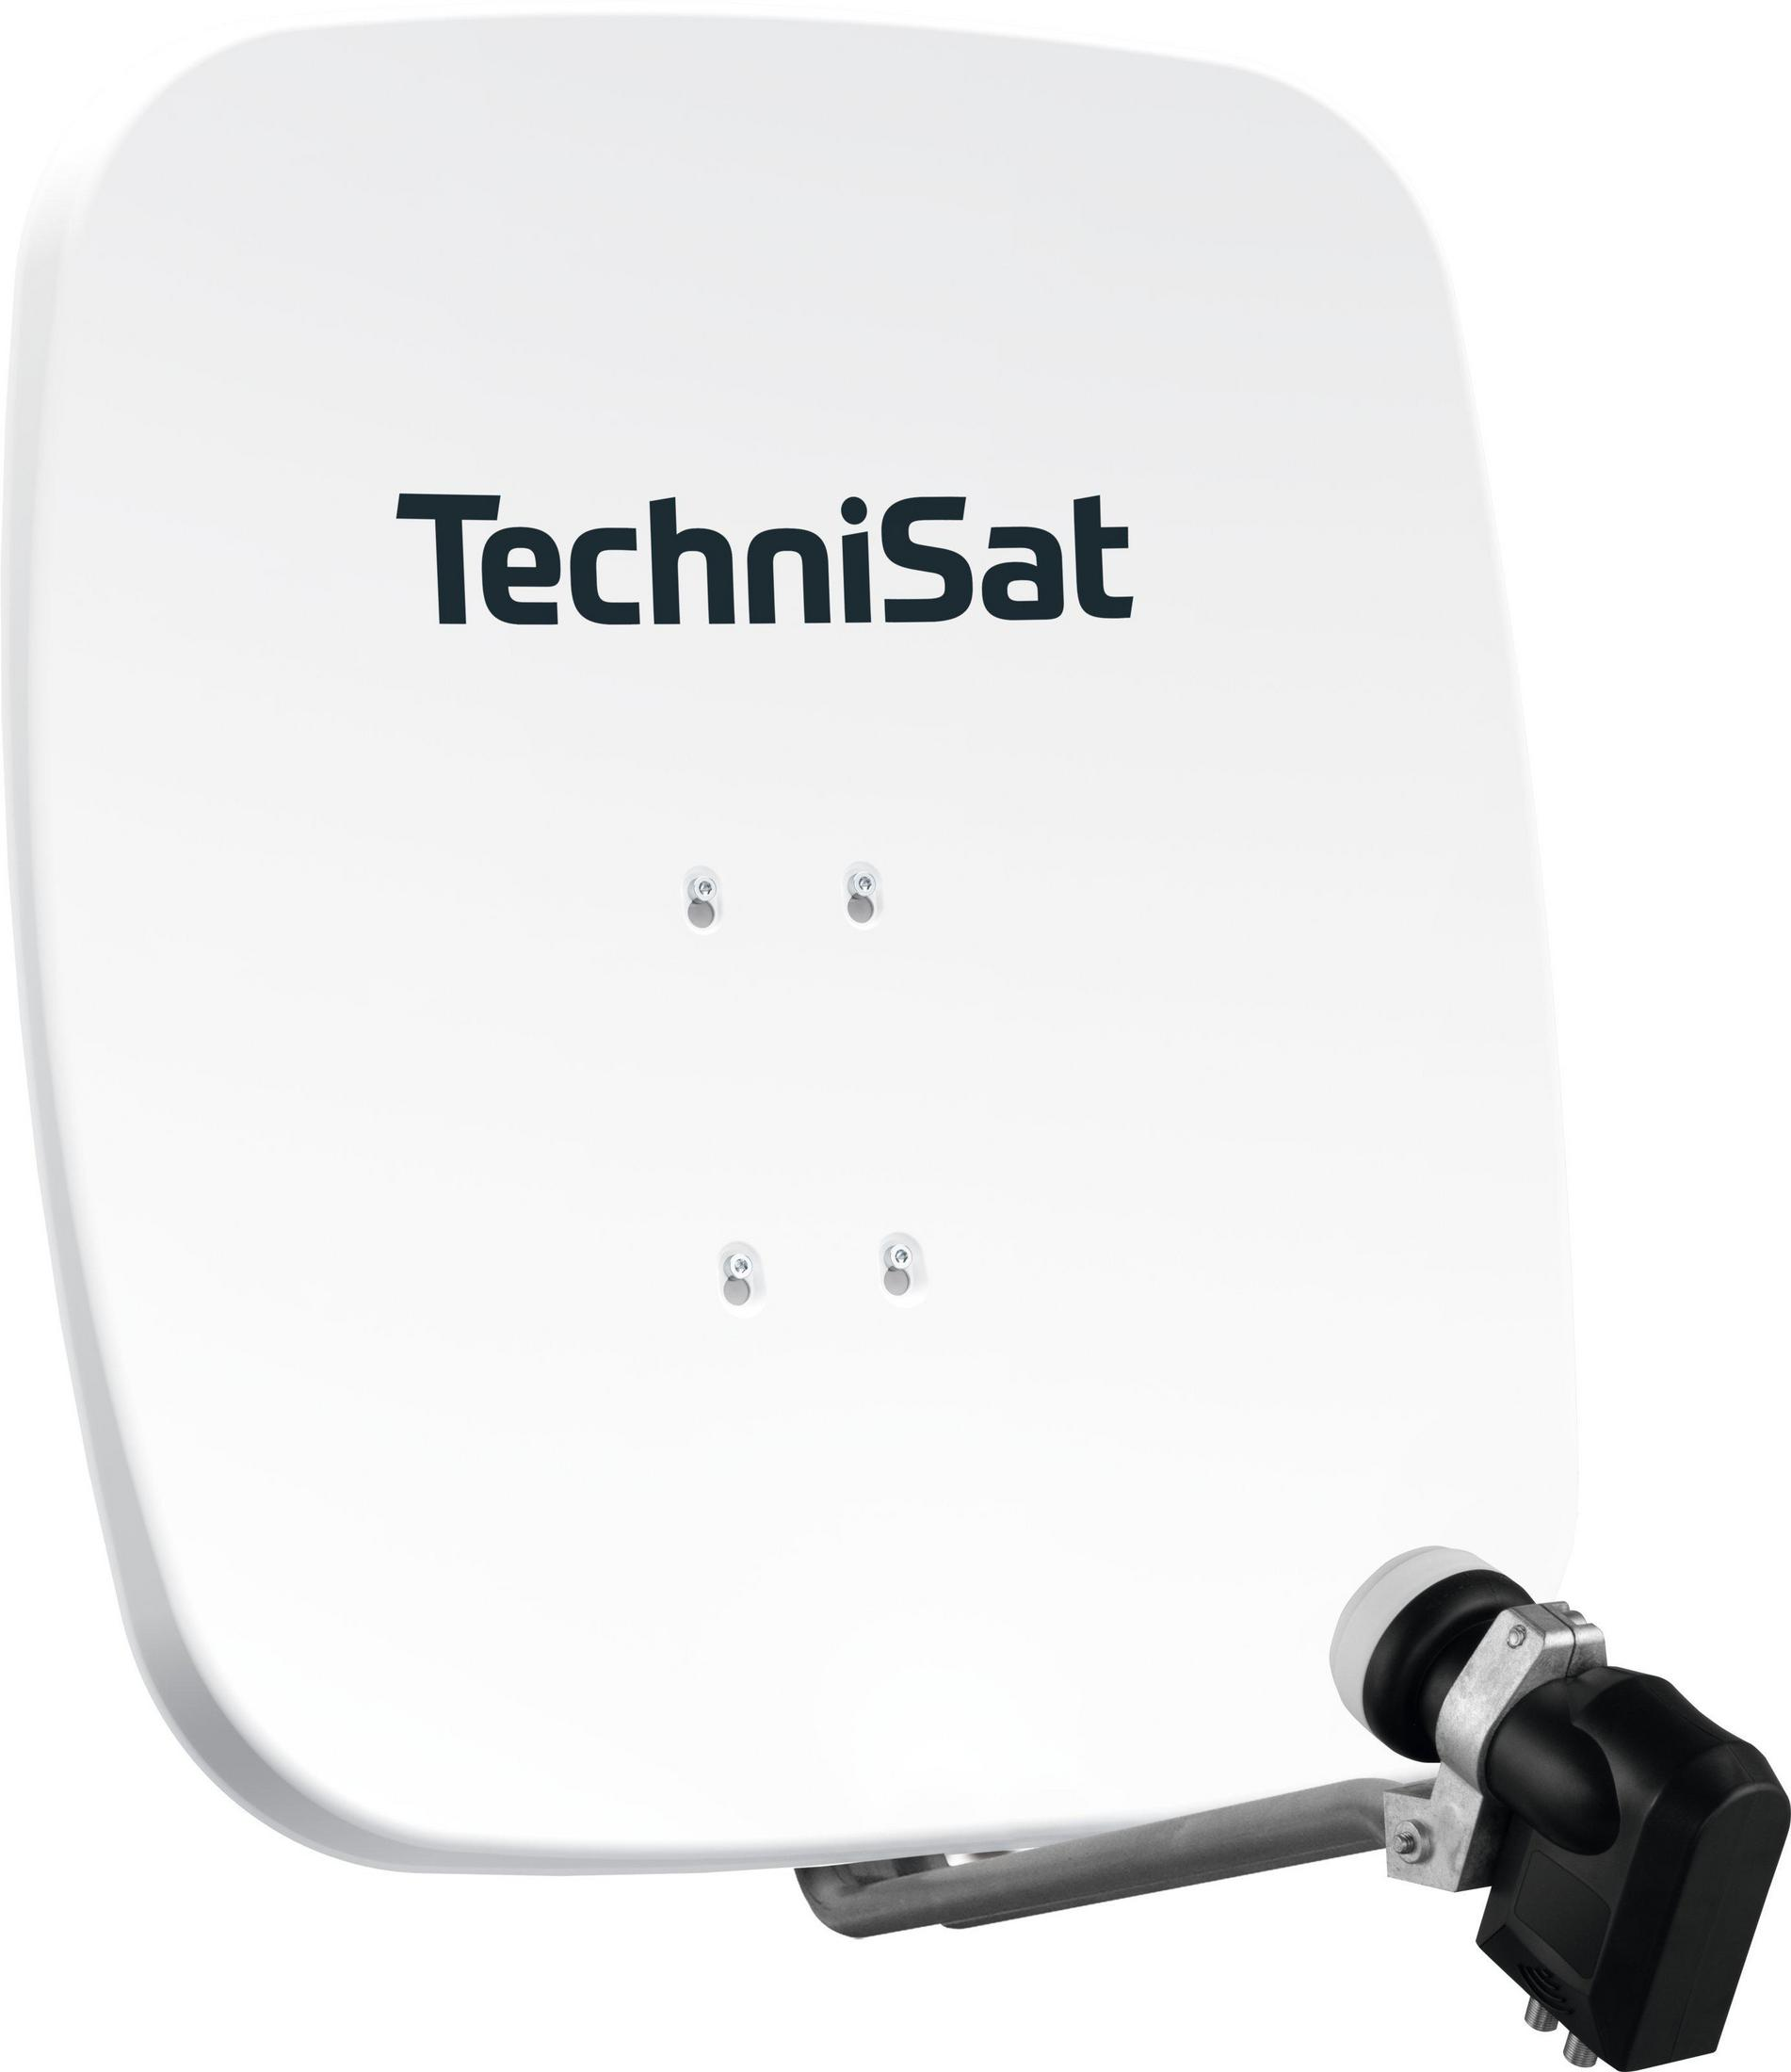 MM SATMAN TECHNISAT 65 40 DigitalSat-Antenne QUATTRO-SWITCH-LNB INKL. 2765/4890